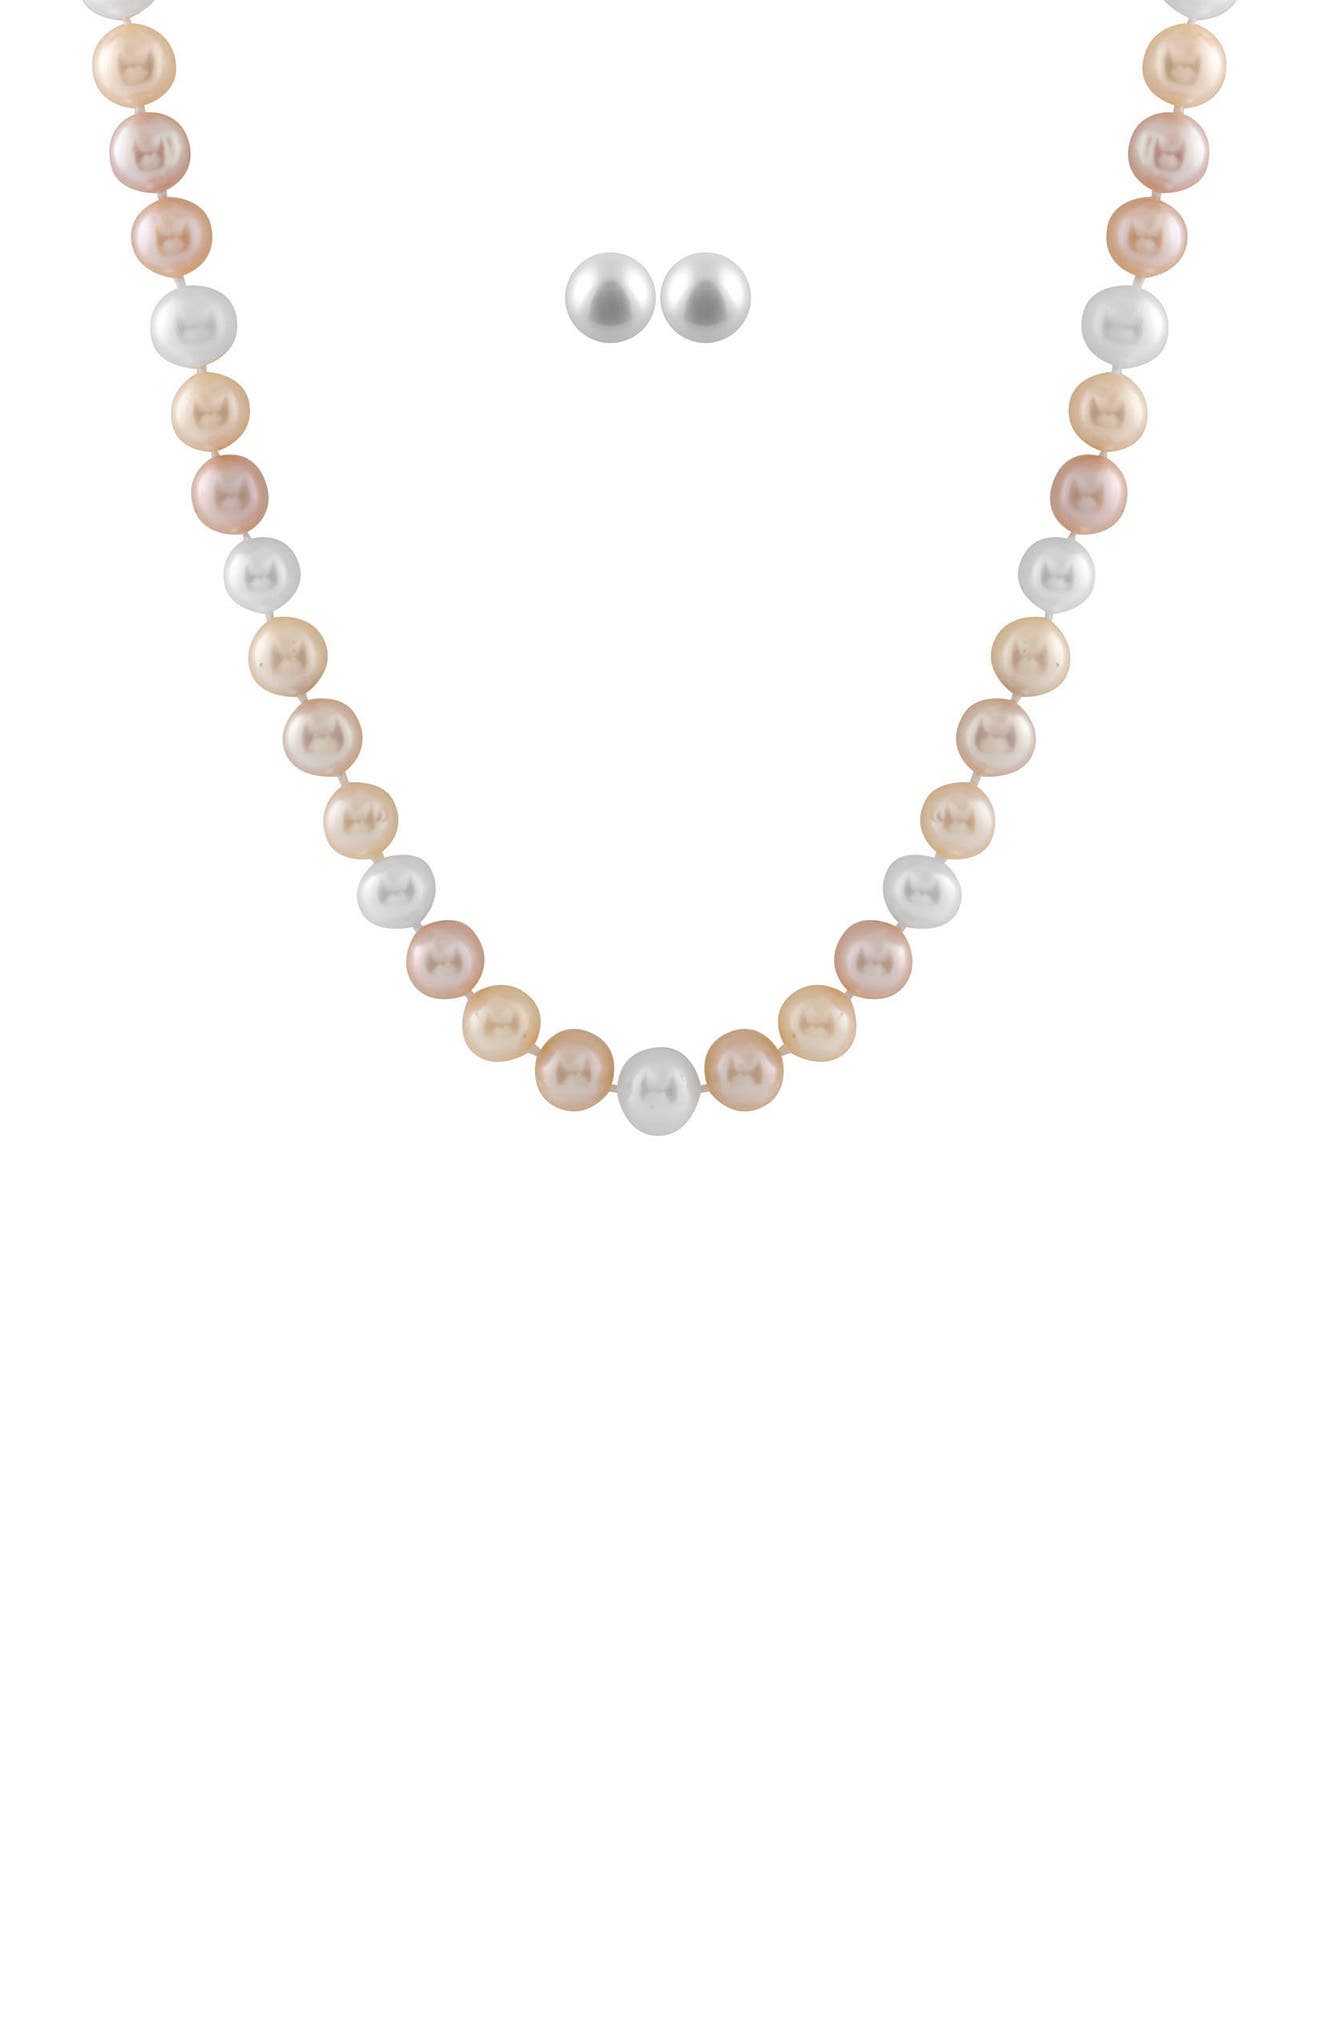 Splendid Pearls Multicolor 9-10mm Cultured Freshwater Pearl Necklace & Earrings Set